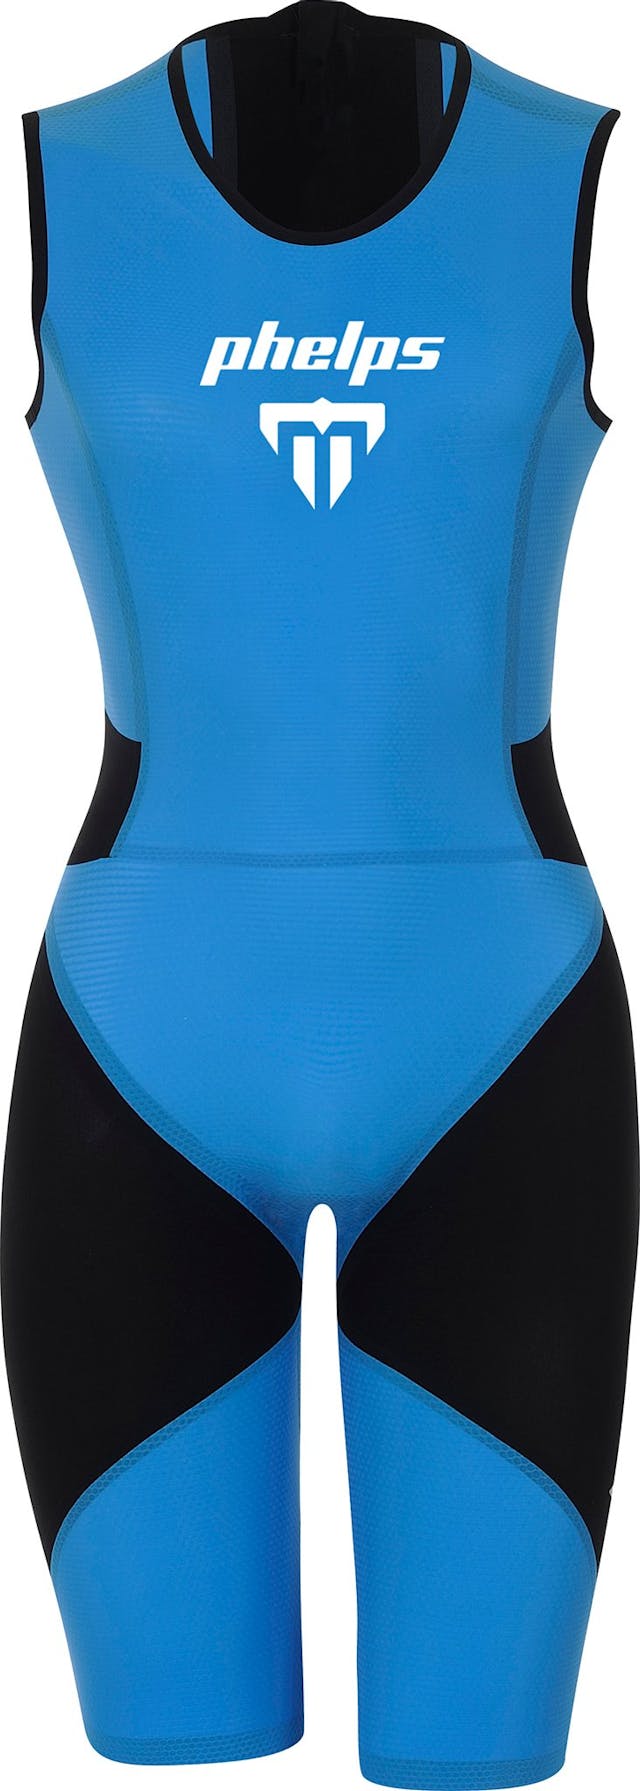 Product image for Phantom Speedsuit - Women's